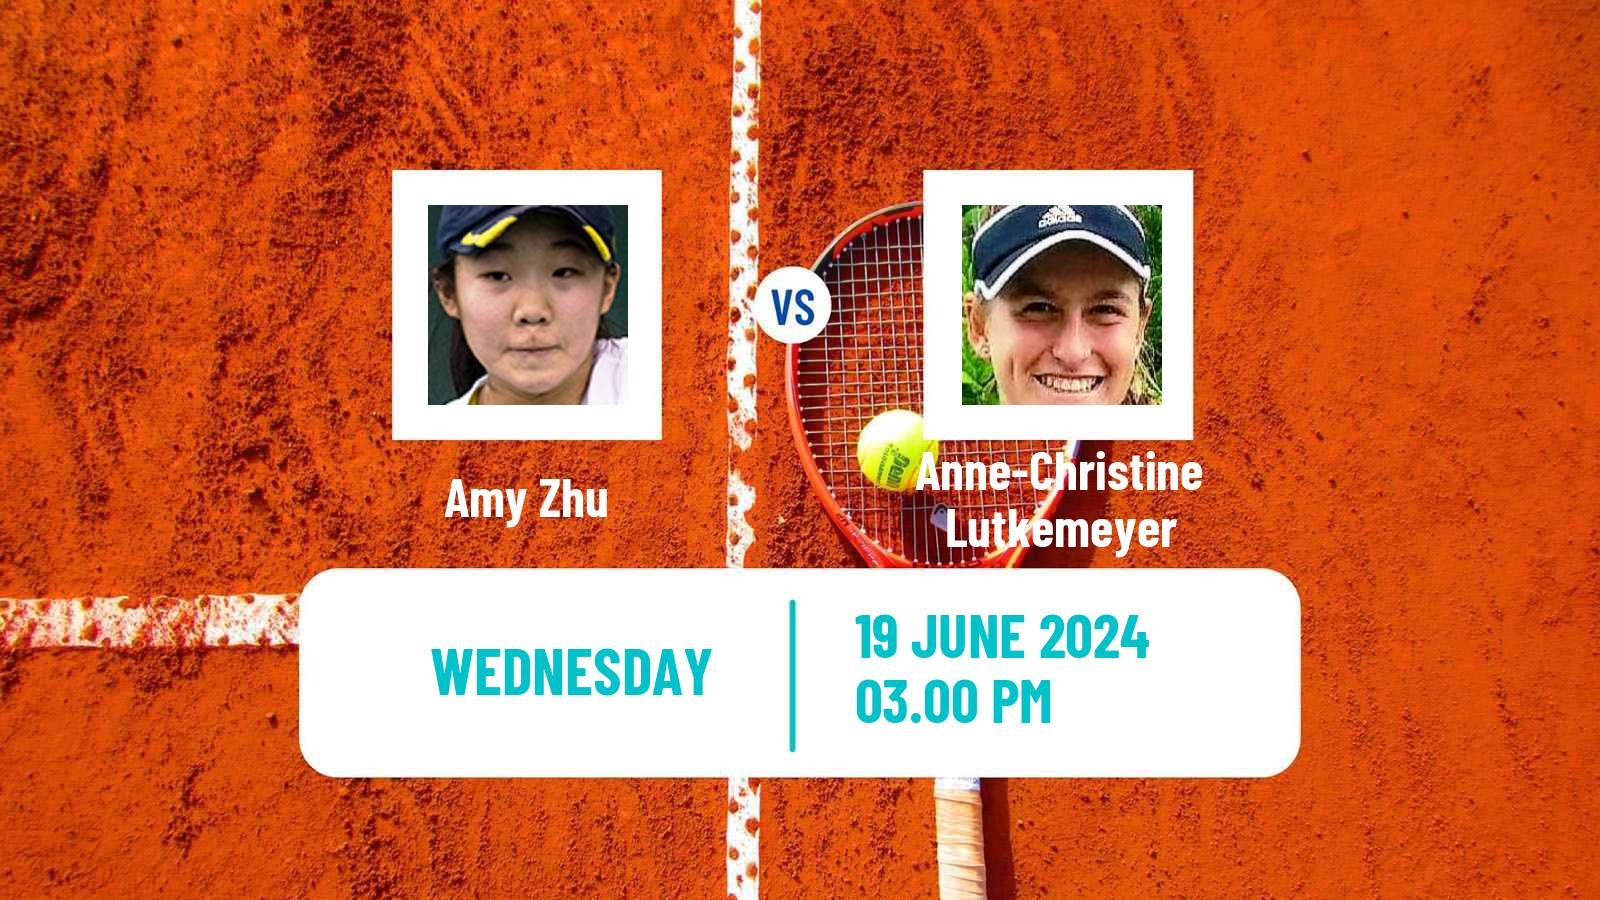 Tennis ITF W15 Rancho Santa Fe Ca Women Amy Zhu - Anne-Christine Lutkemeyer